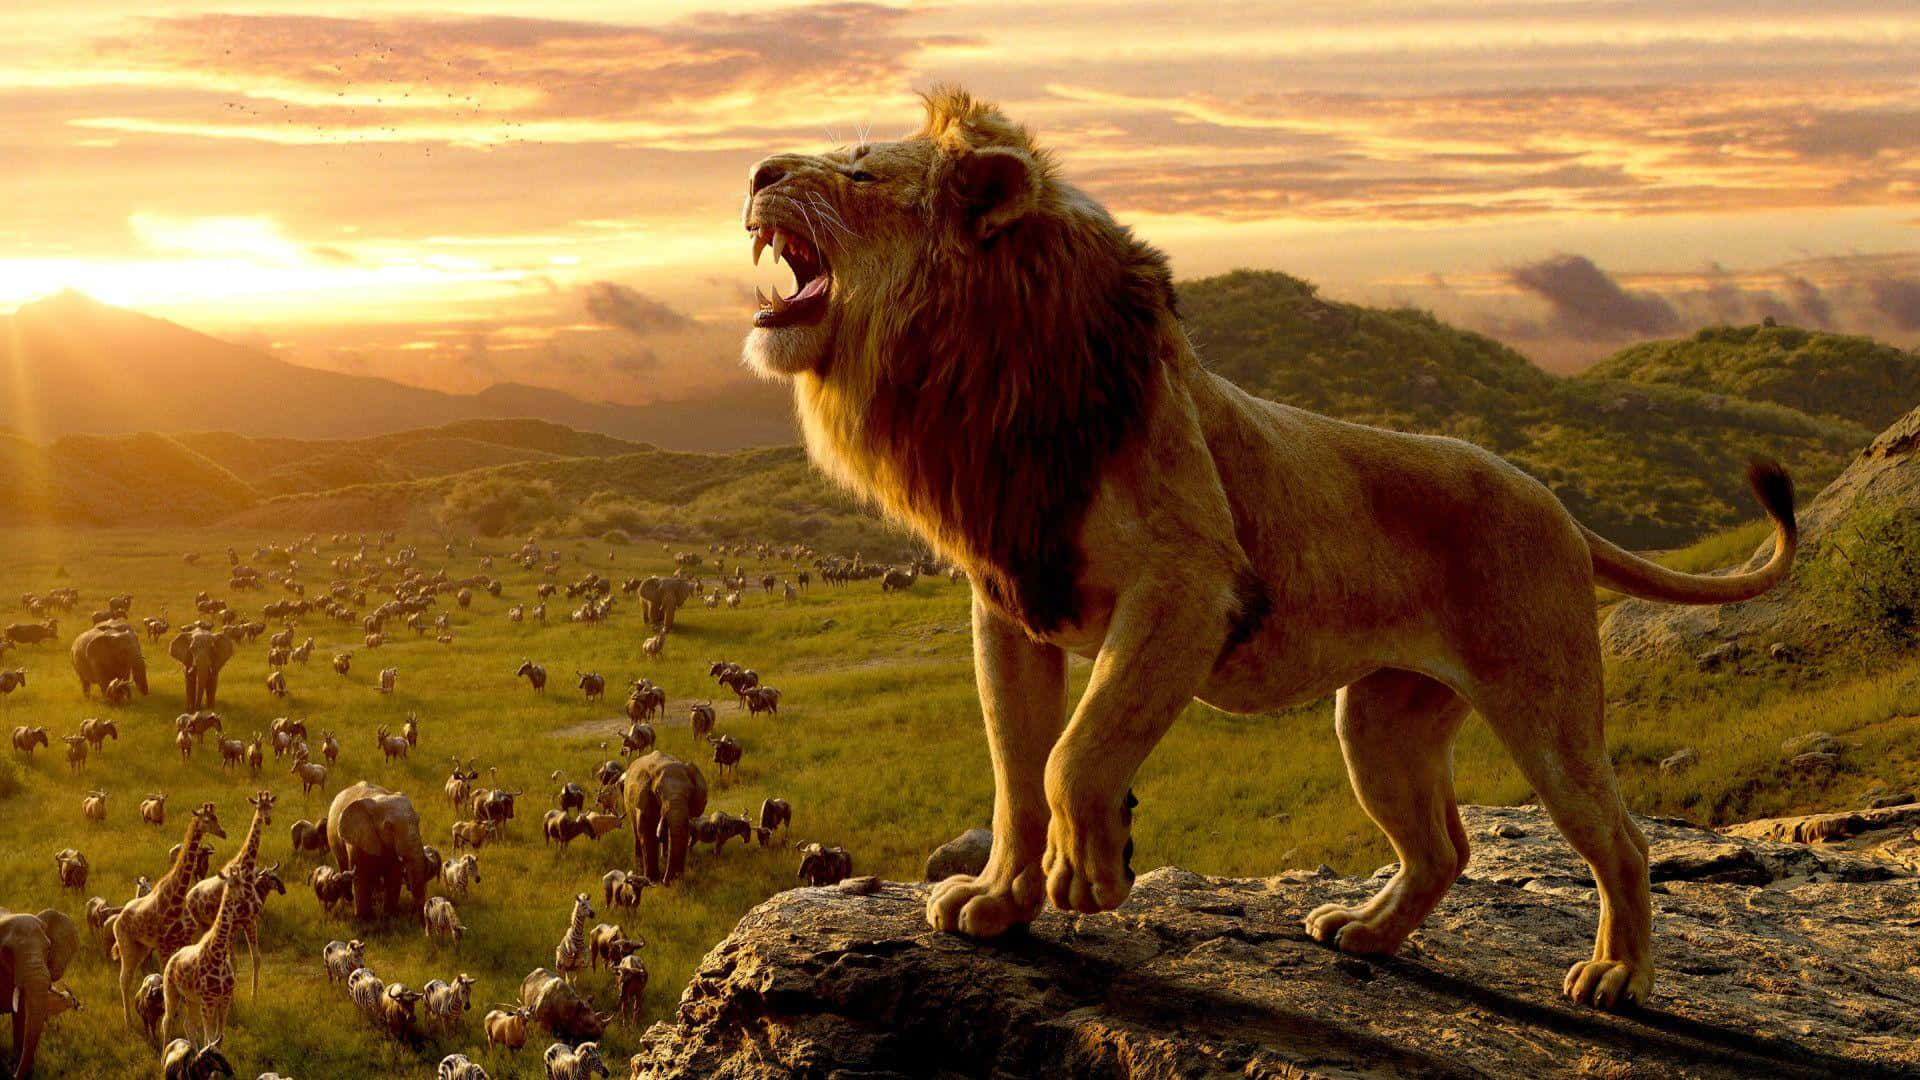 Majestic Lion Roaringat Sunset